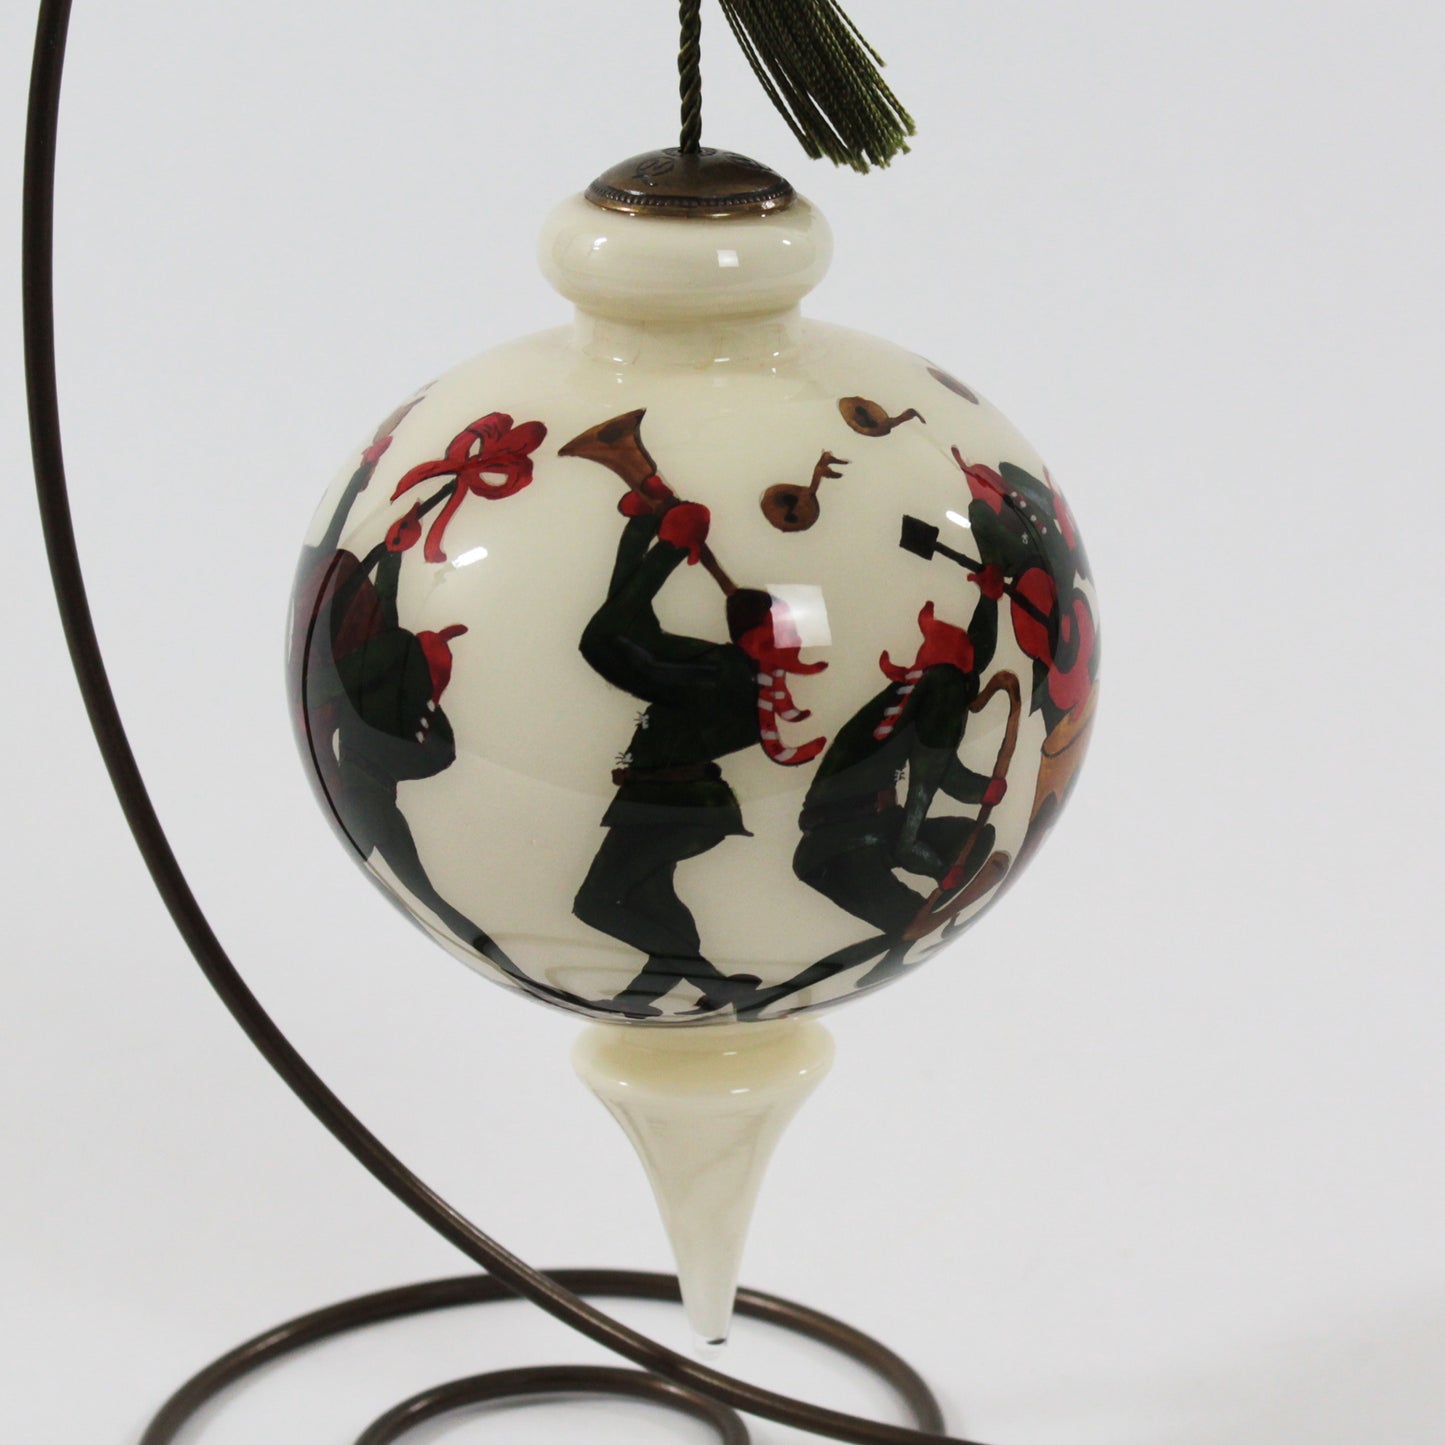 Rejoice Ne'Qwa Art Glass Ornament by Annie Lee hanging